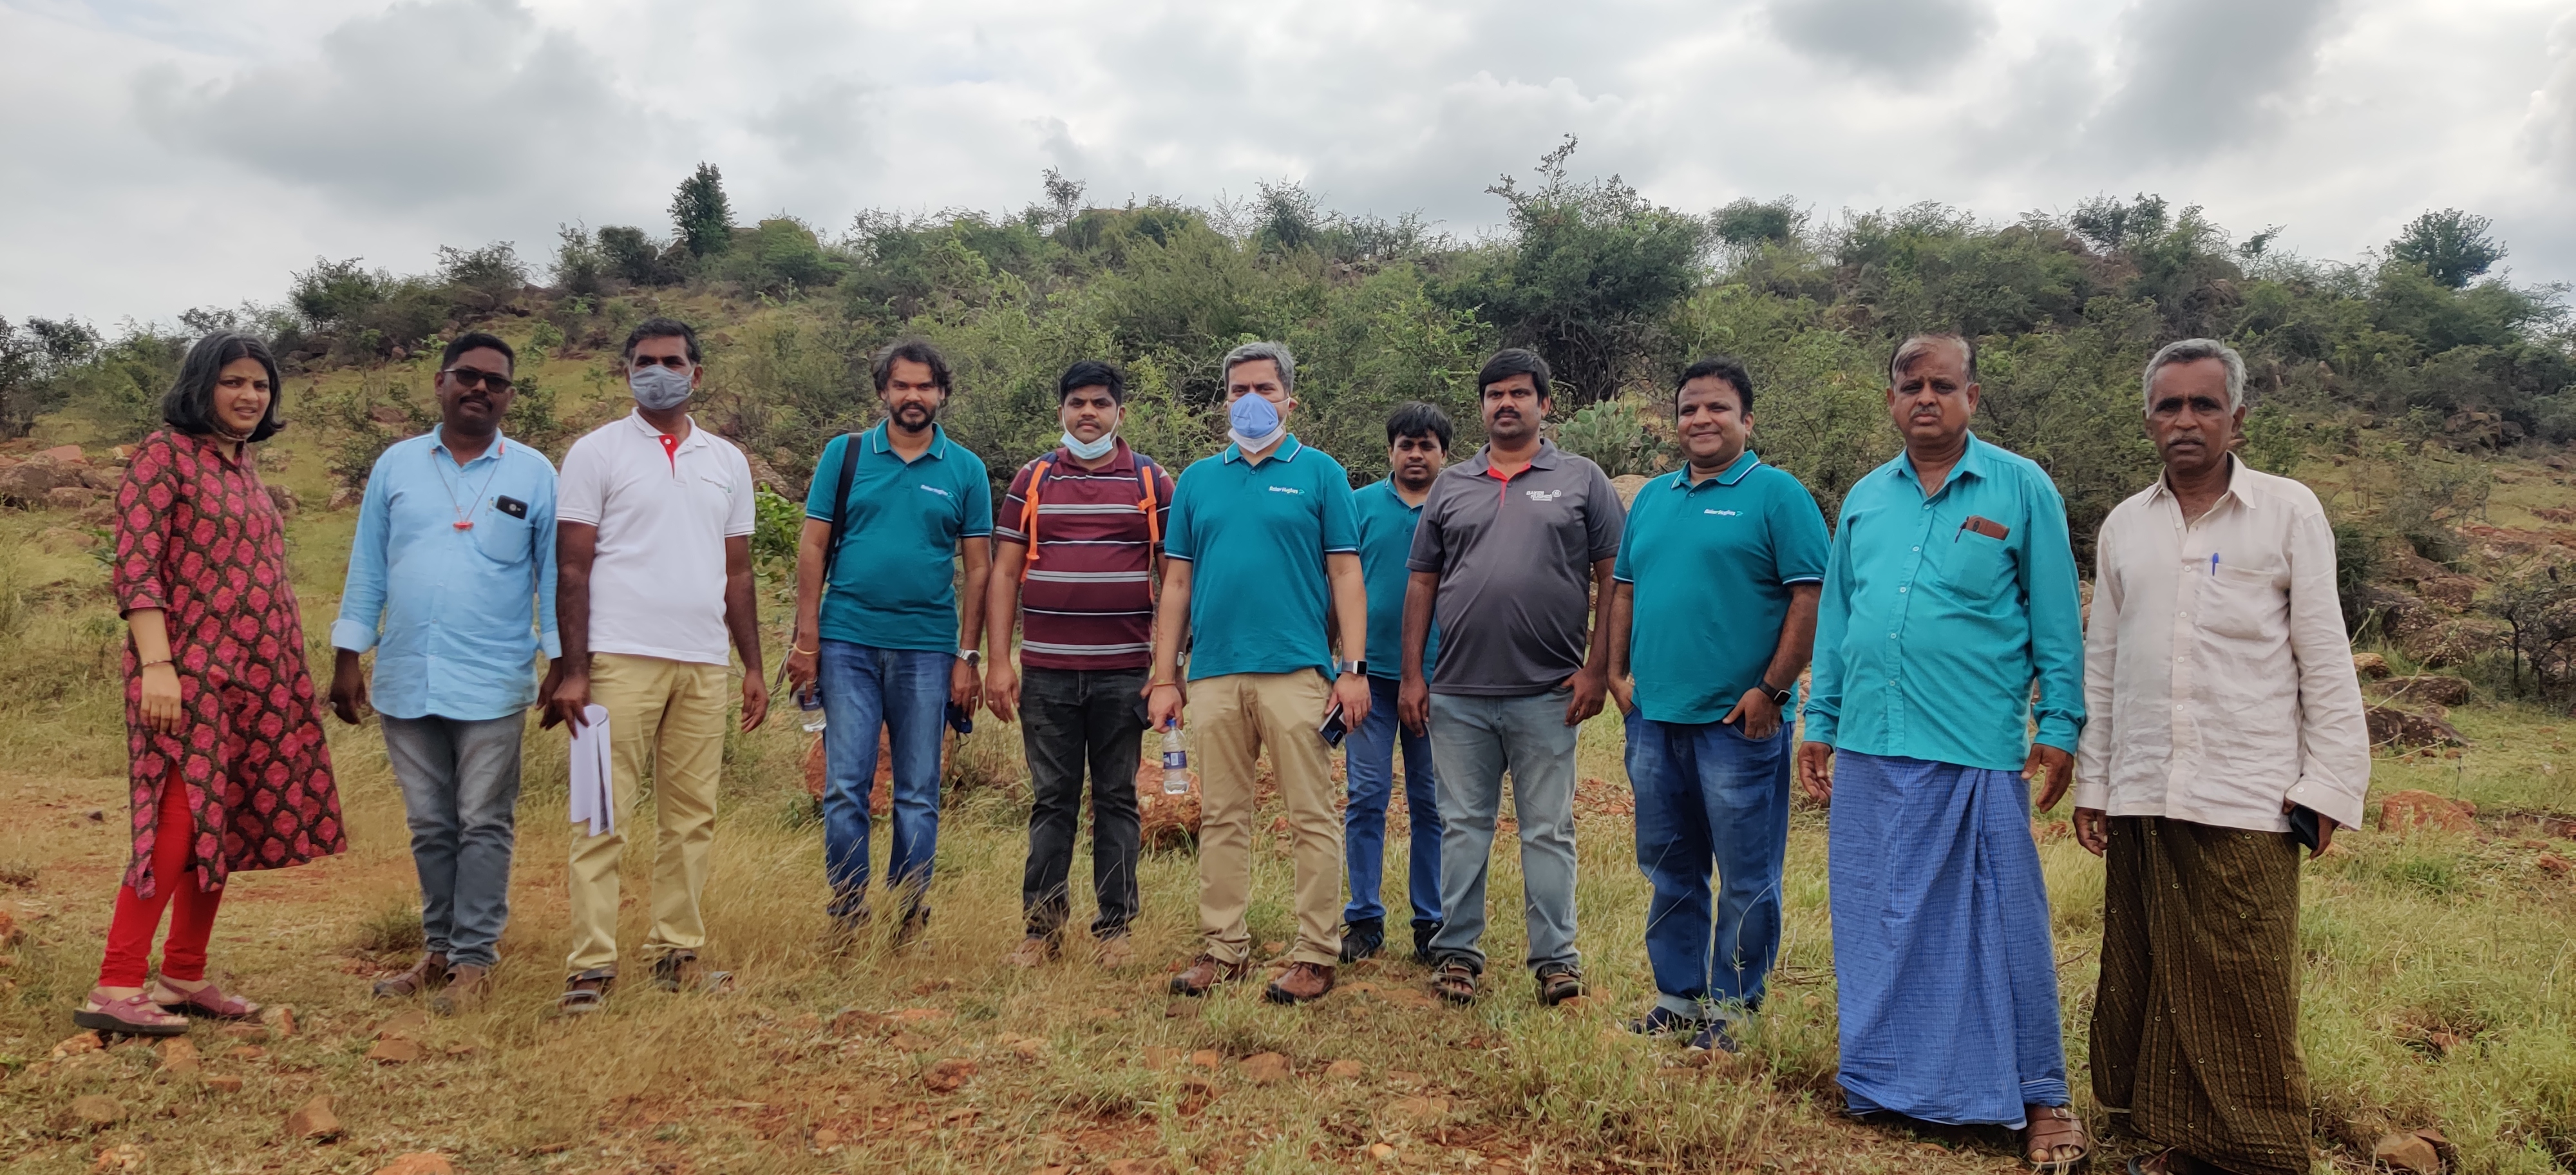 efs_印度项目:当地农民会见贝克休斯团队188金宝搏网站多少